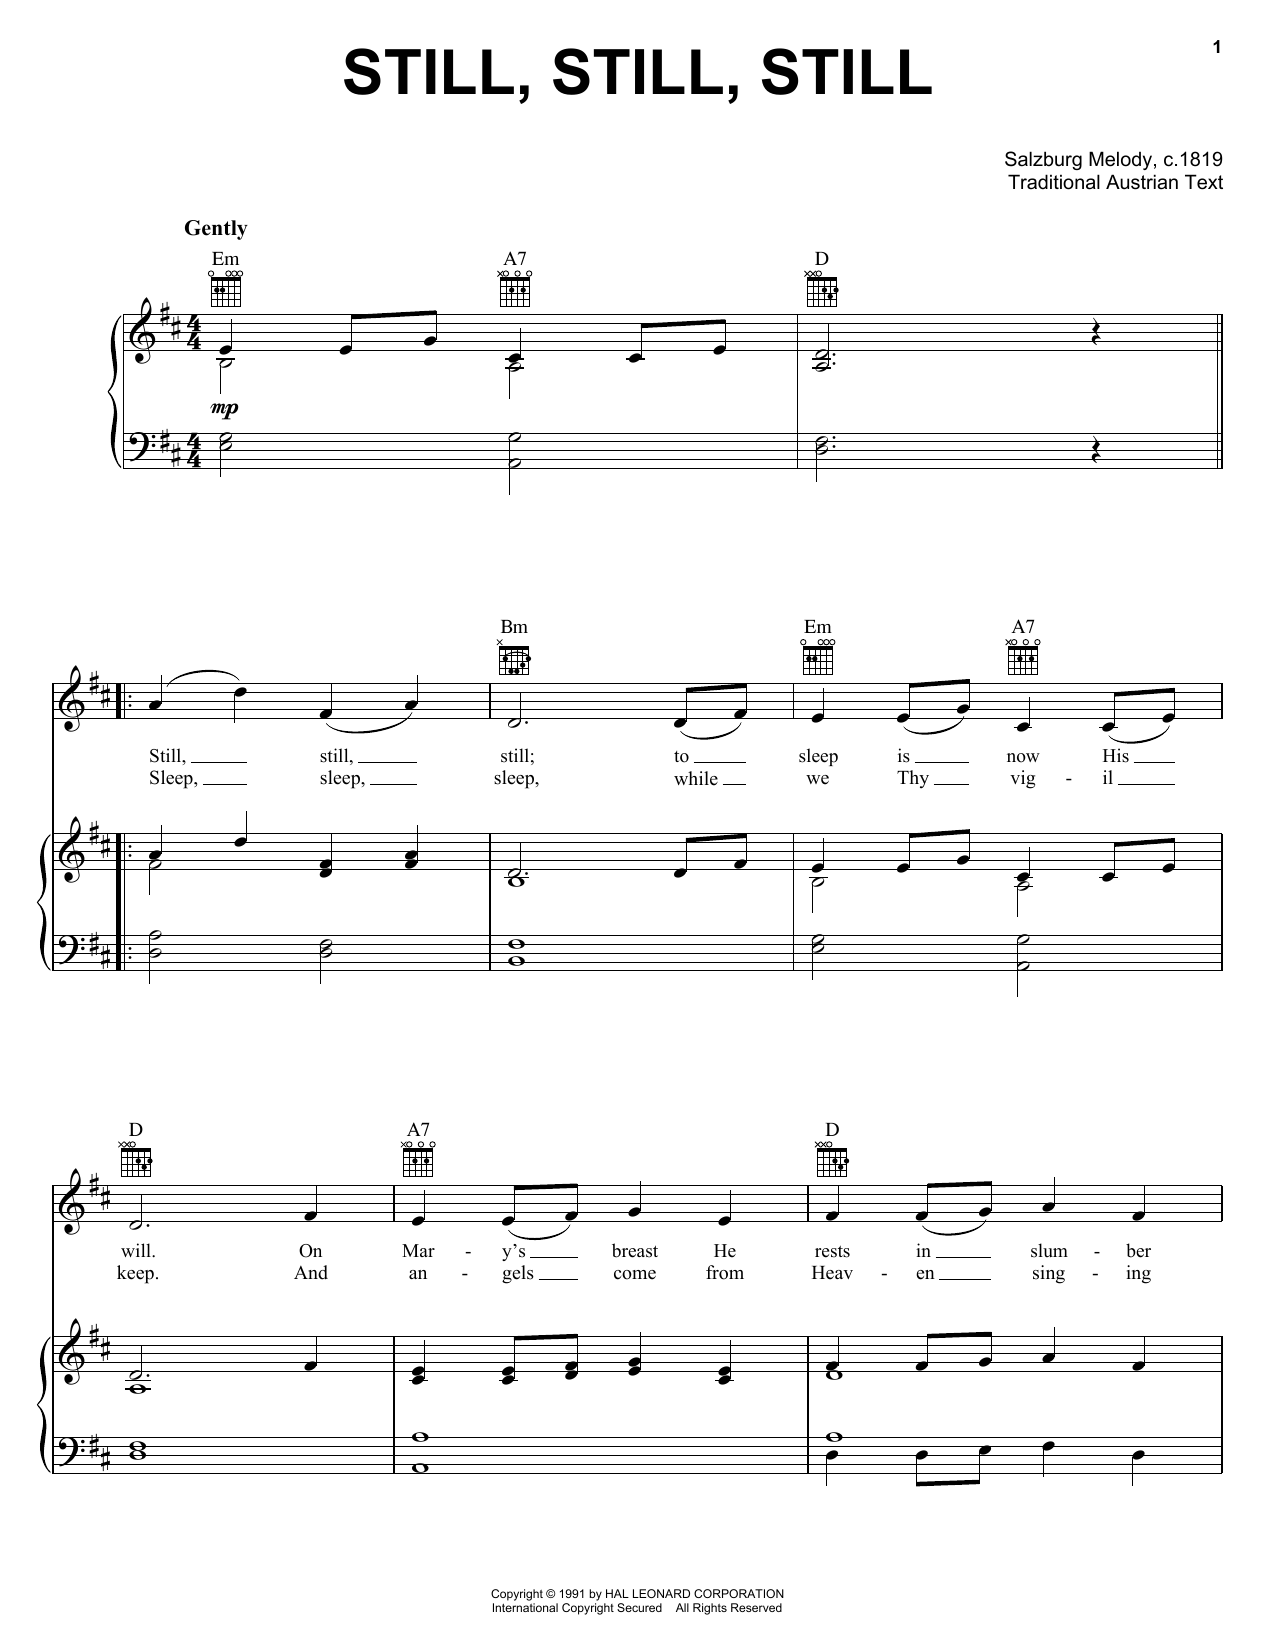 Traditional Still, Still, Still sheet music notes and chords arranged for Piano & Vocal